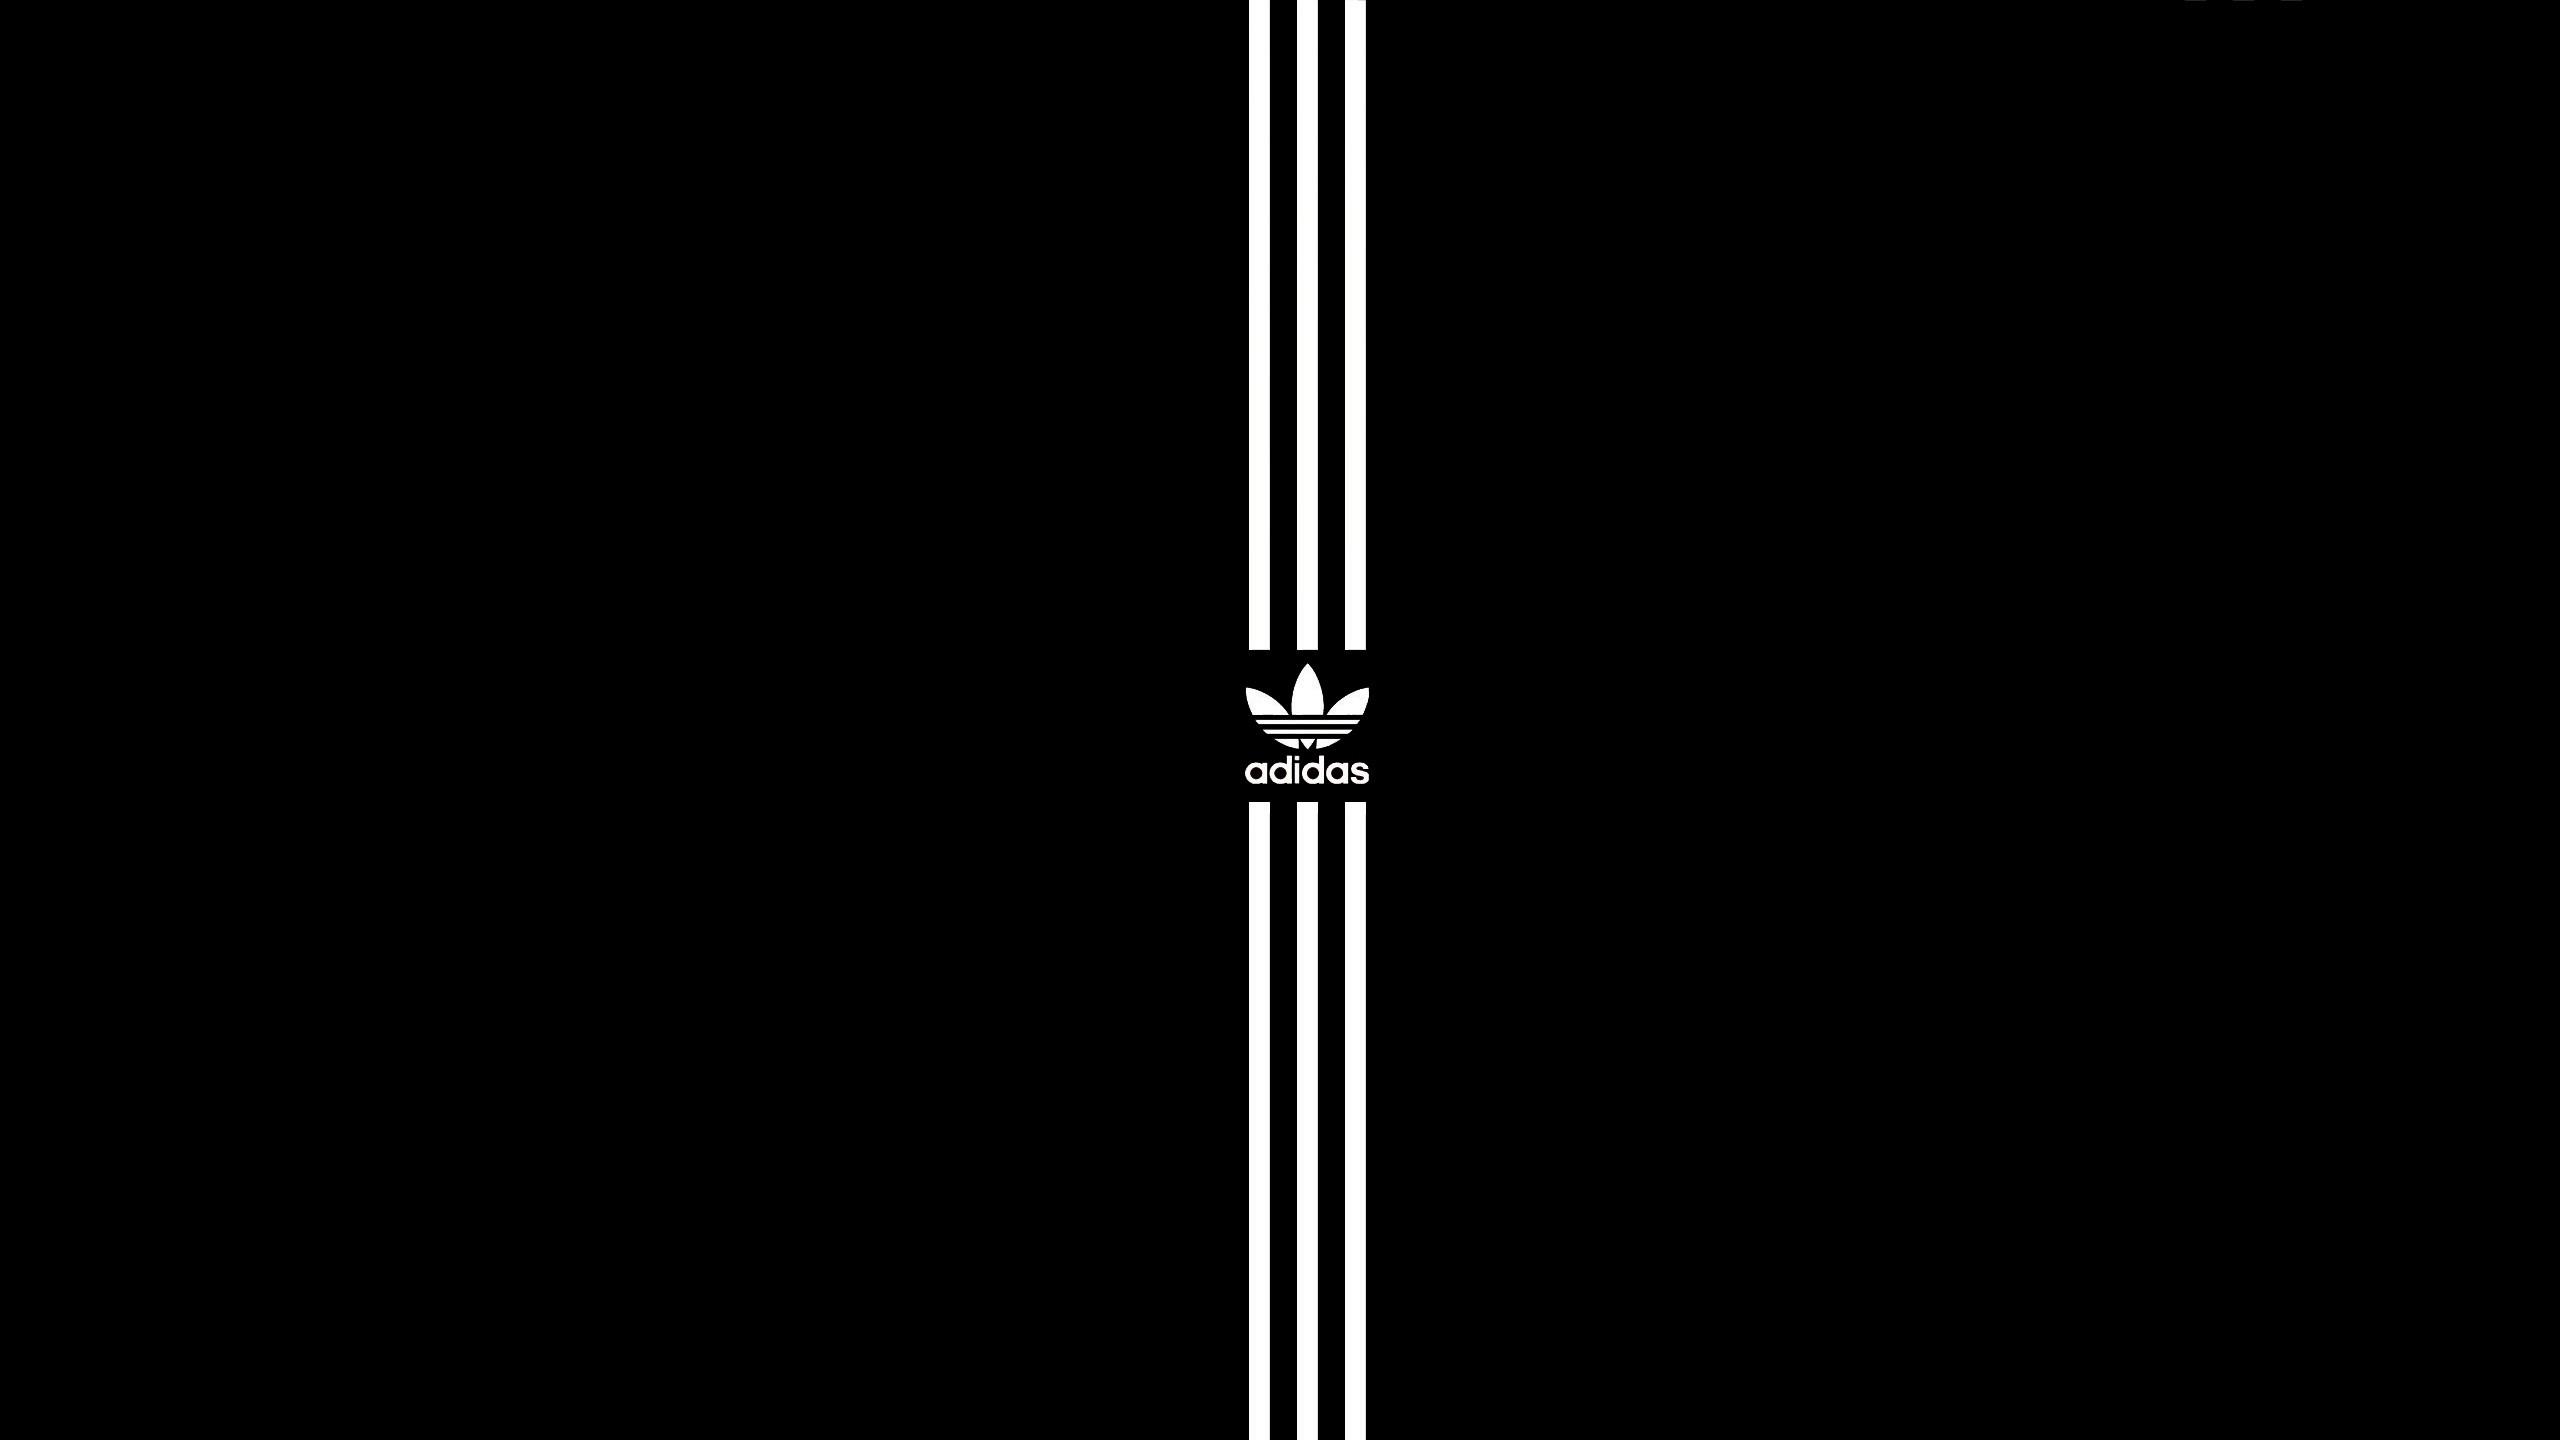 Adidas Original Wallpaper